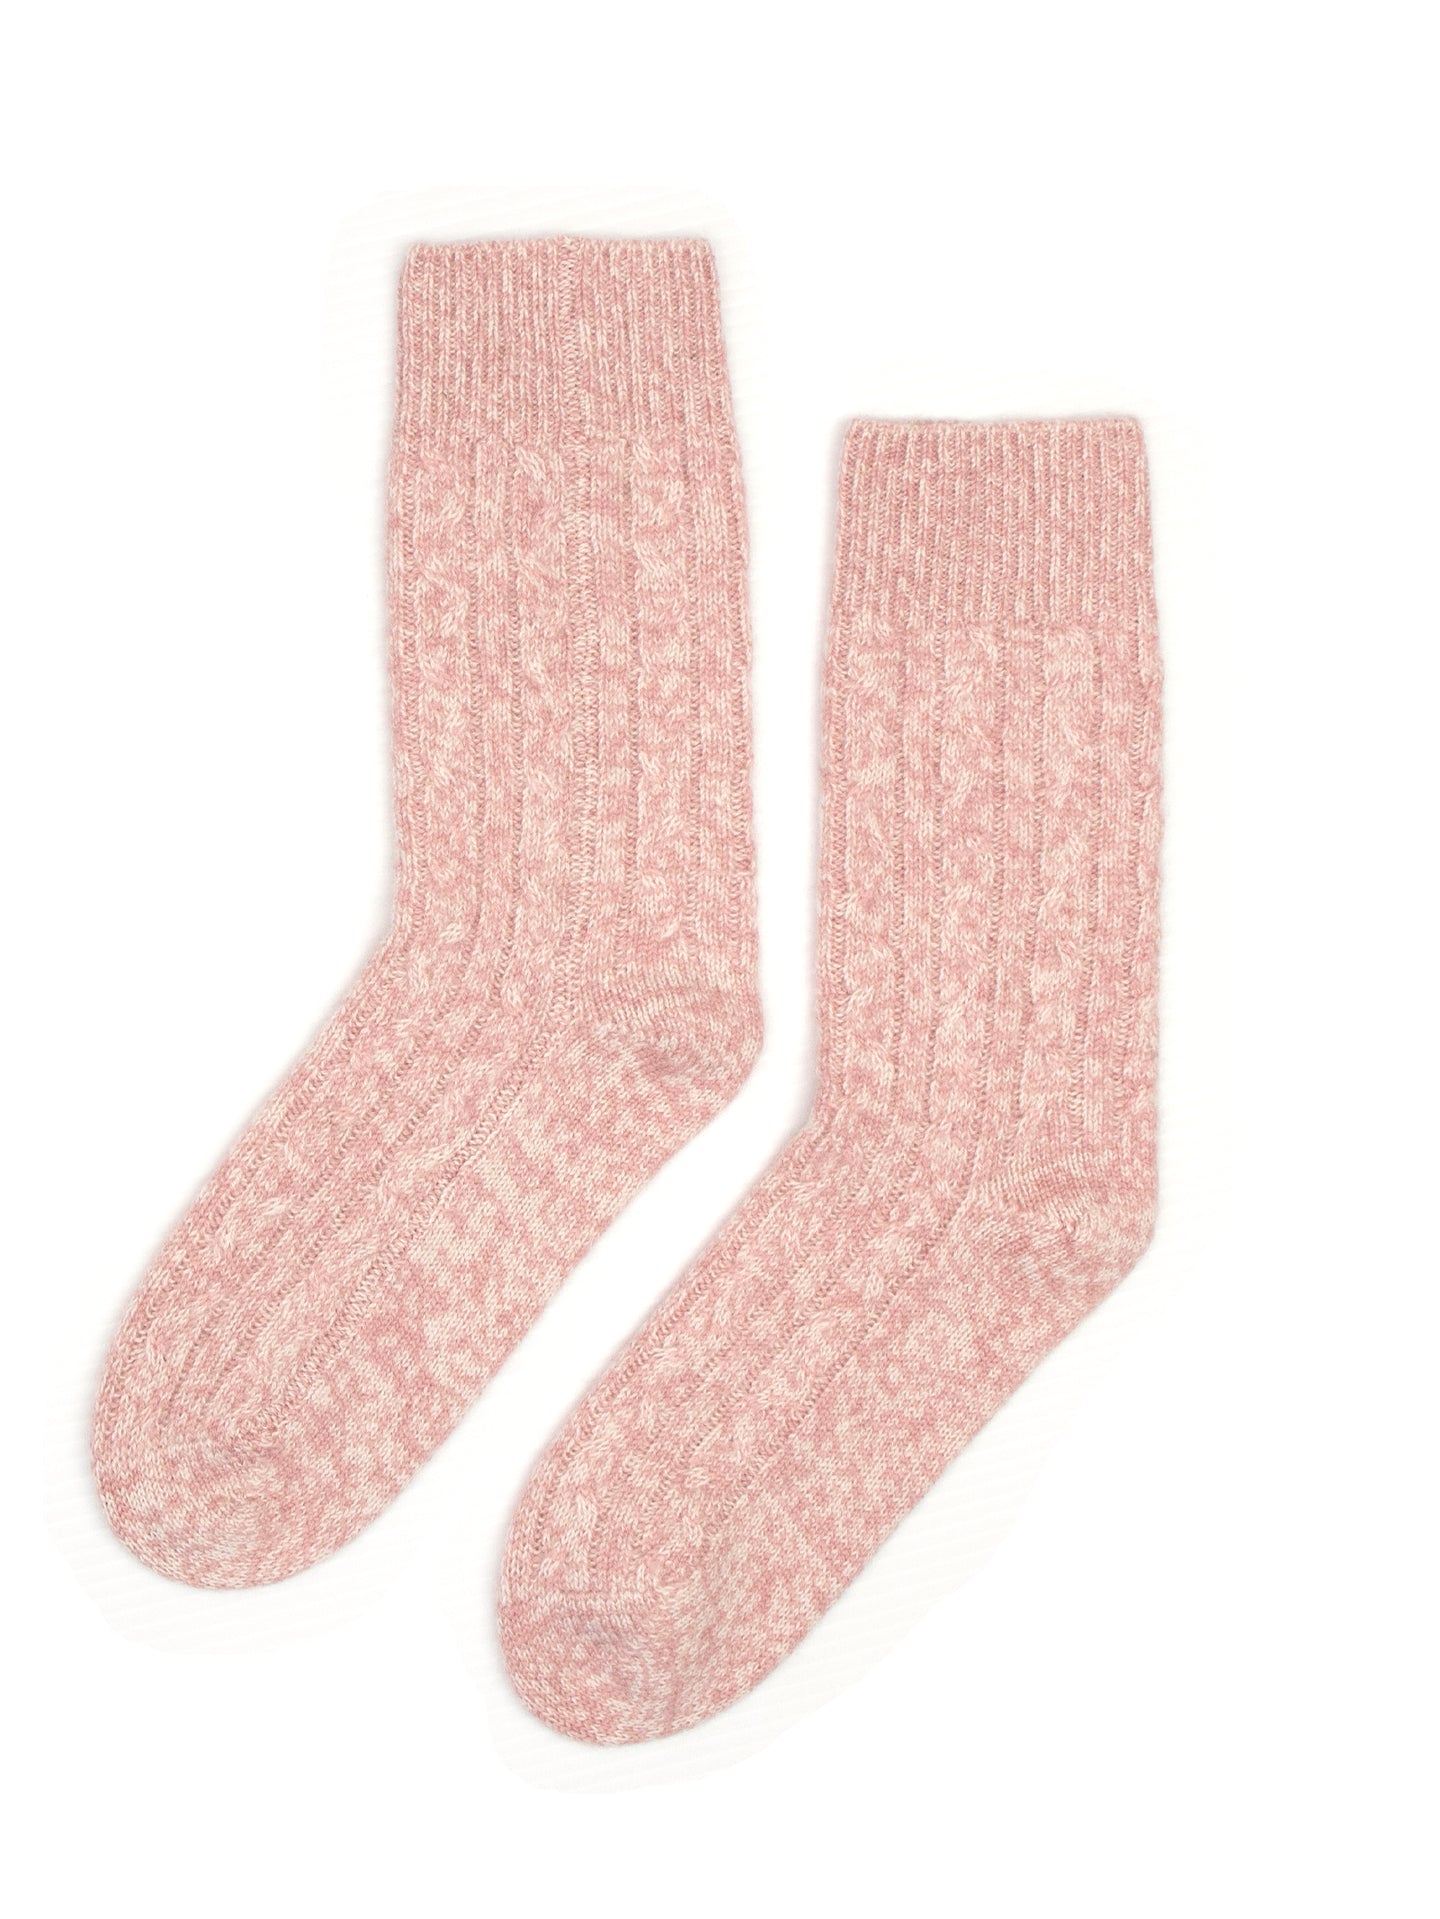 Cashmere Cable Socks in Veneta Pink Melange